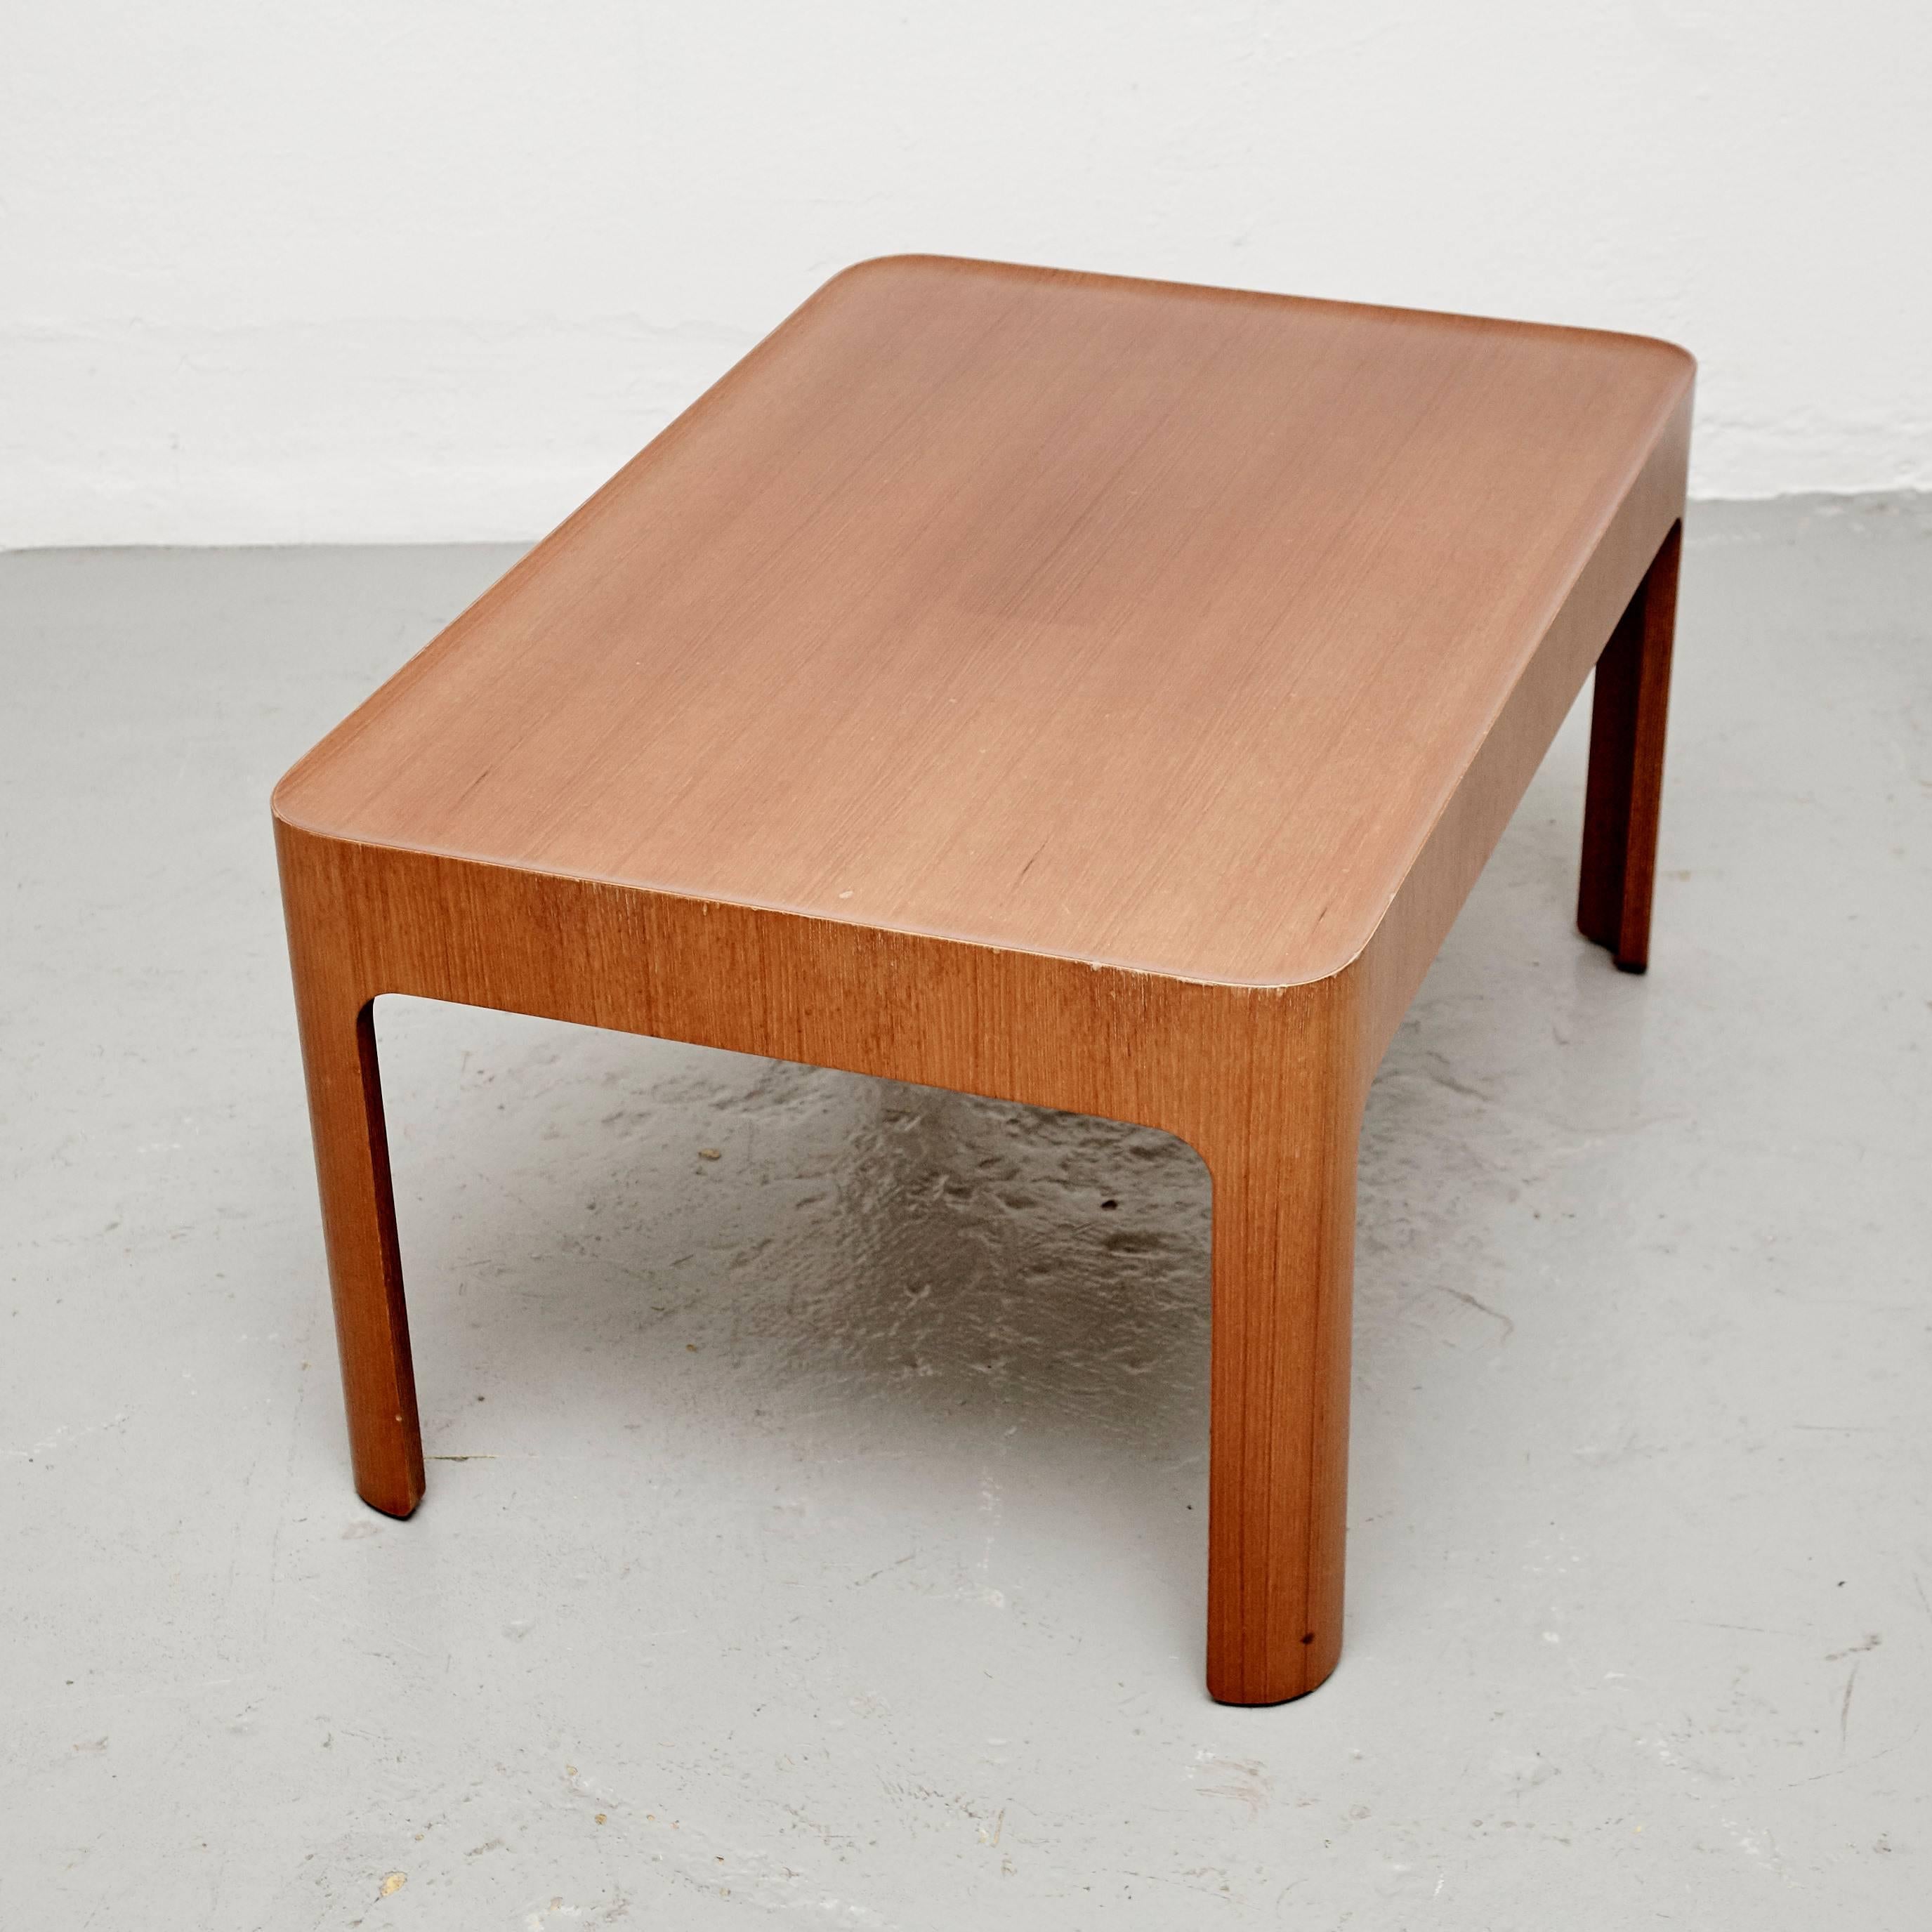 Japanese Isamu Kenmochi Mid-Century Modern Wood Coffee Table